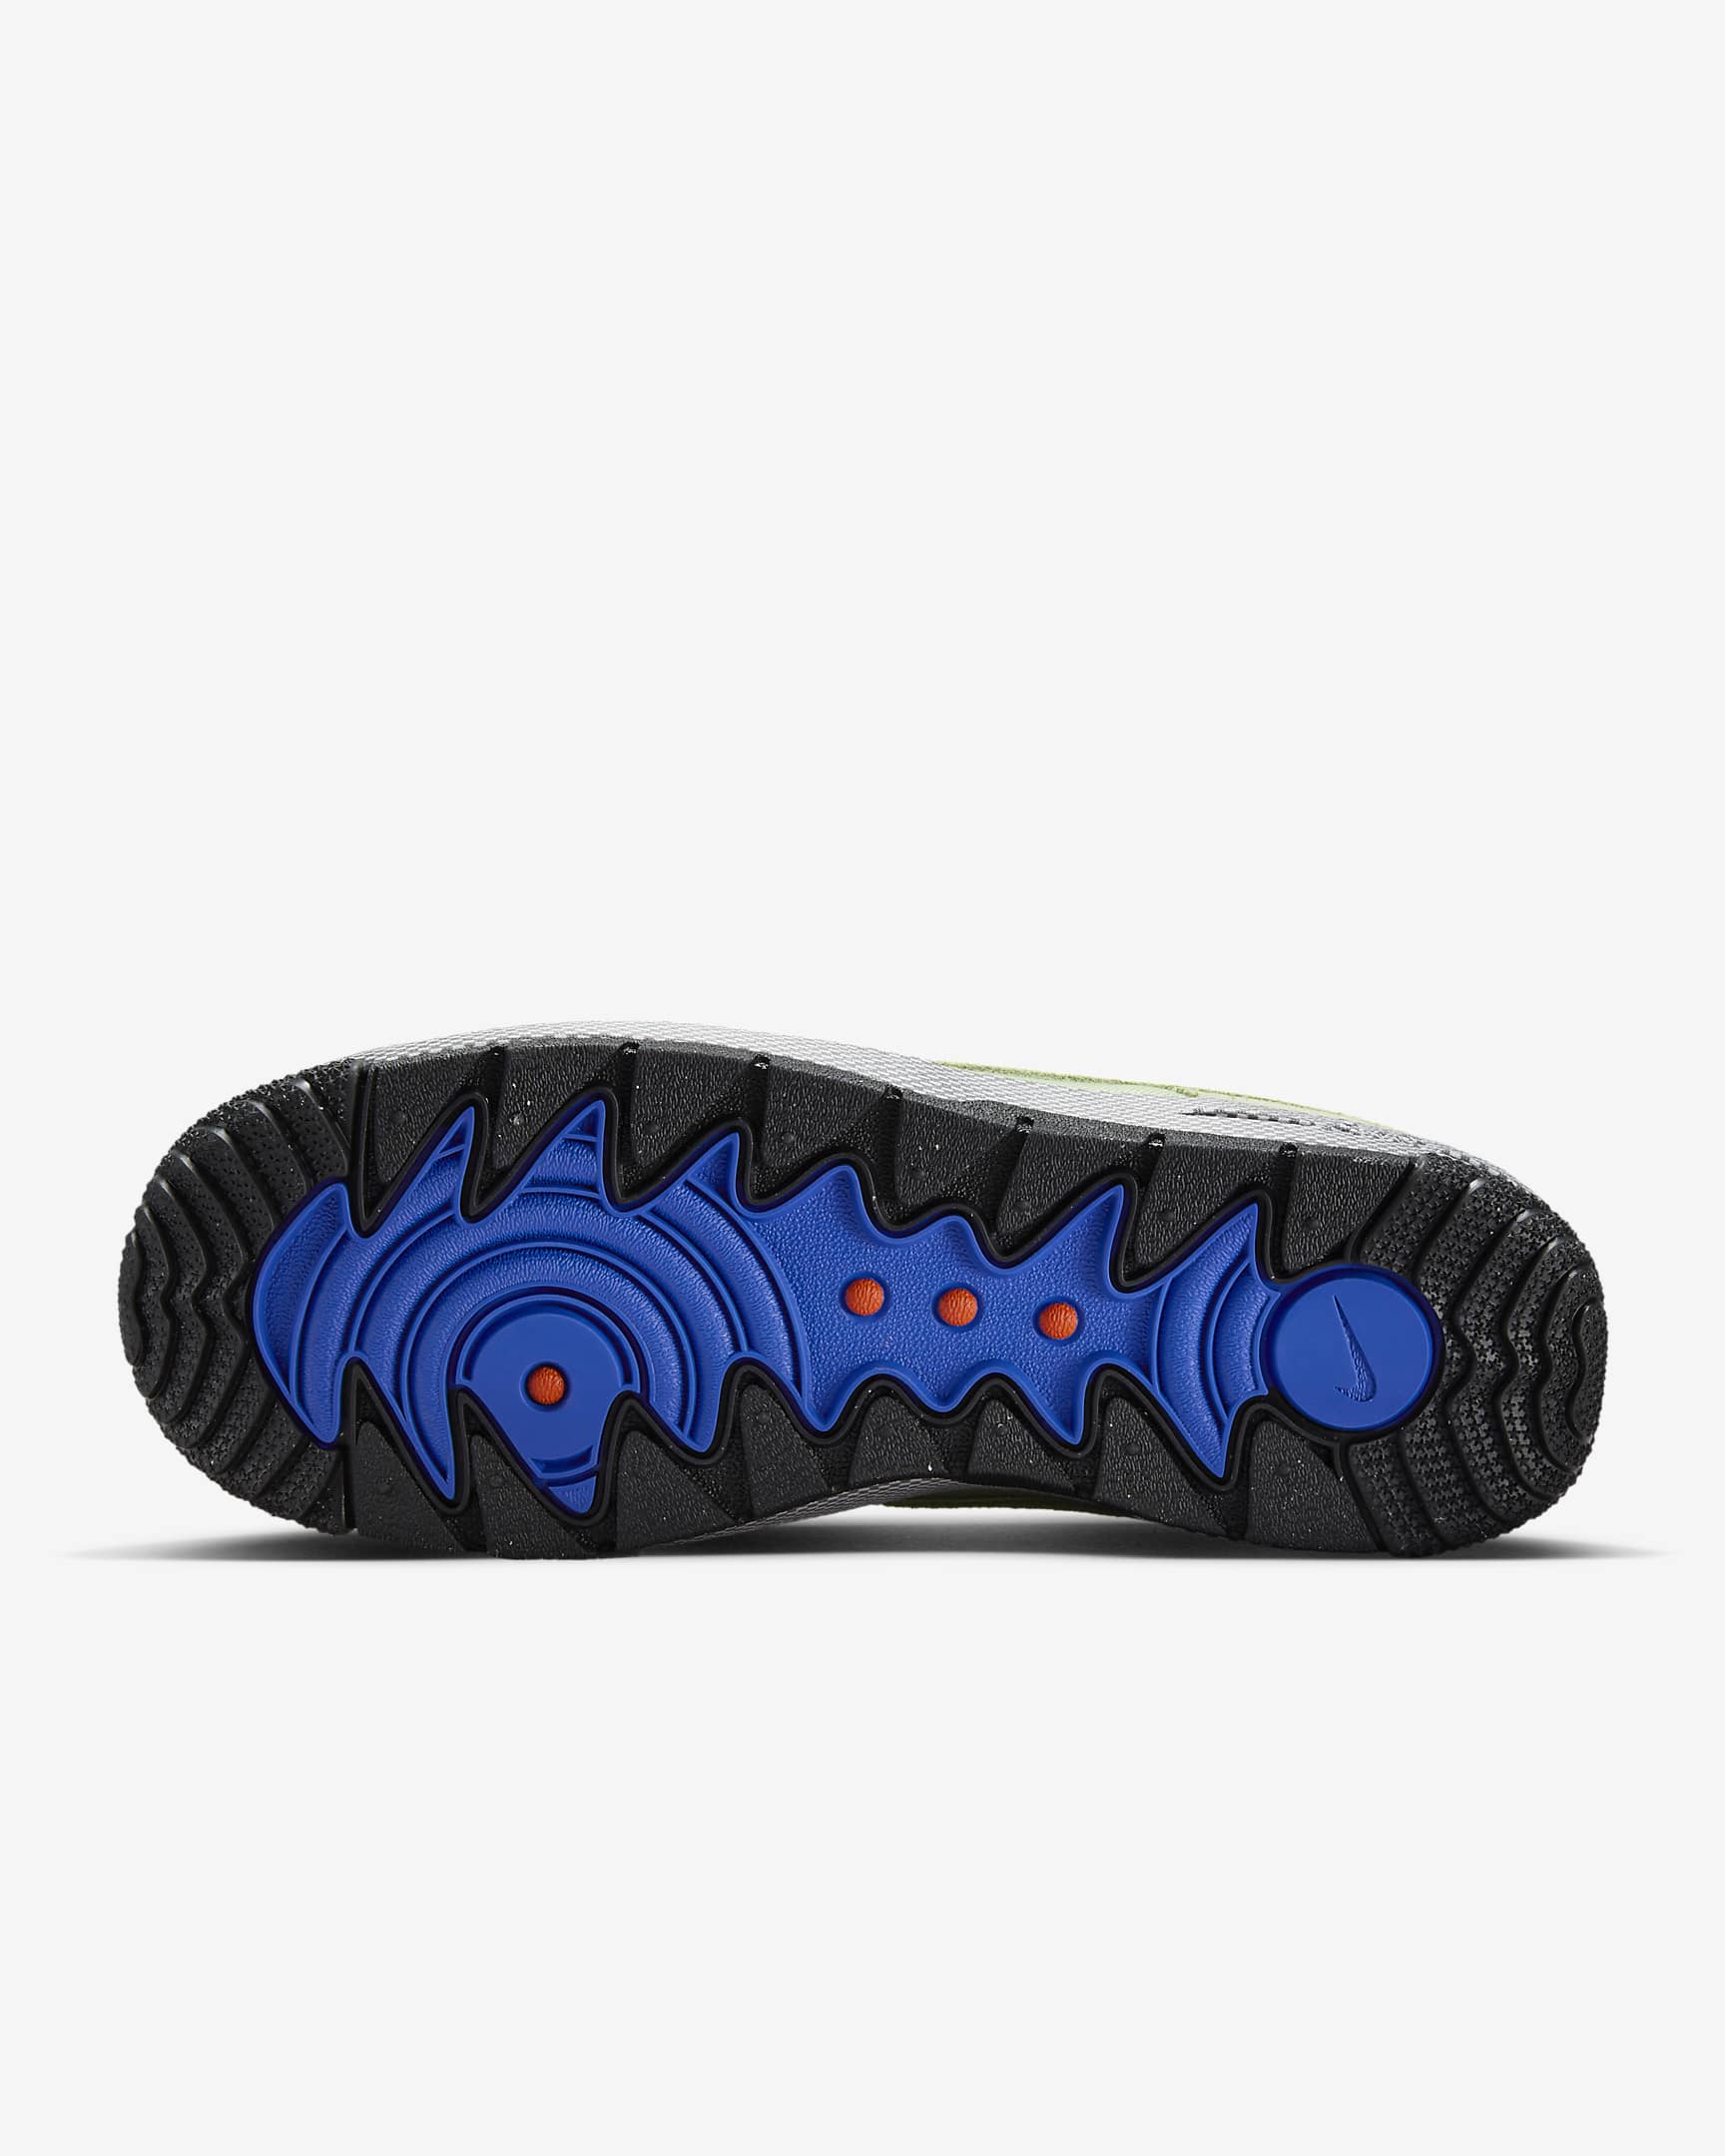 Chaussure Nike Air Force 1 Wild pour femme - Olive Aura/Aquarius Blue/Ashen Slate/Racer Blue